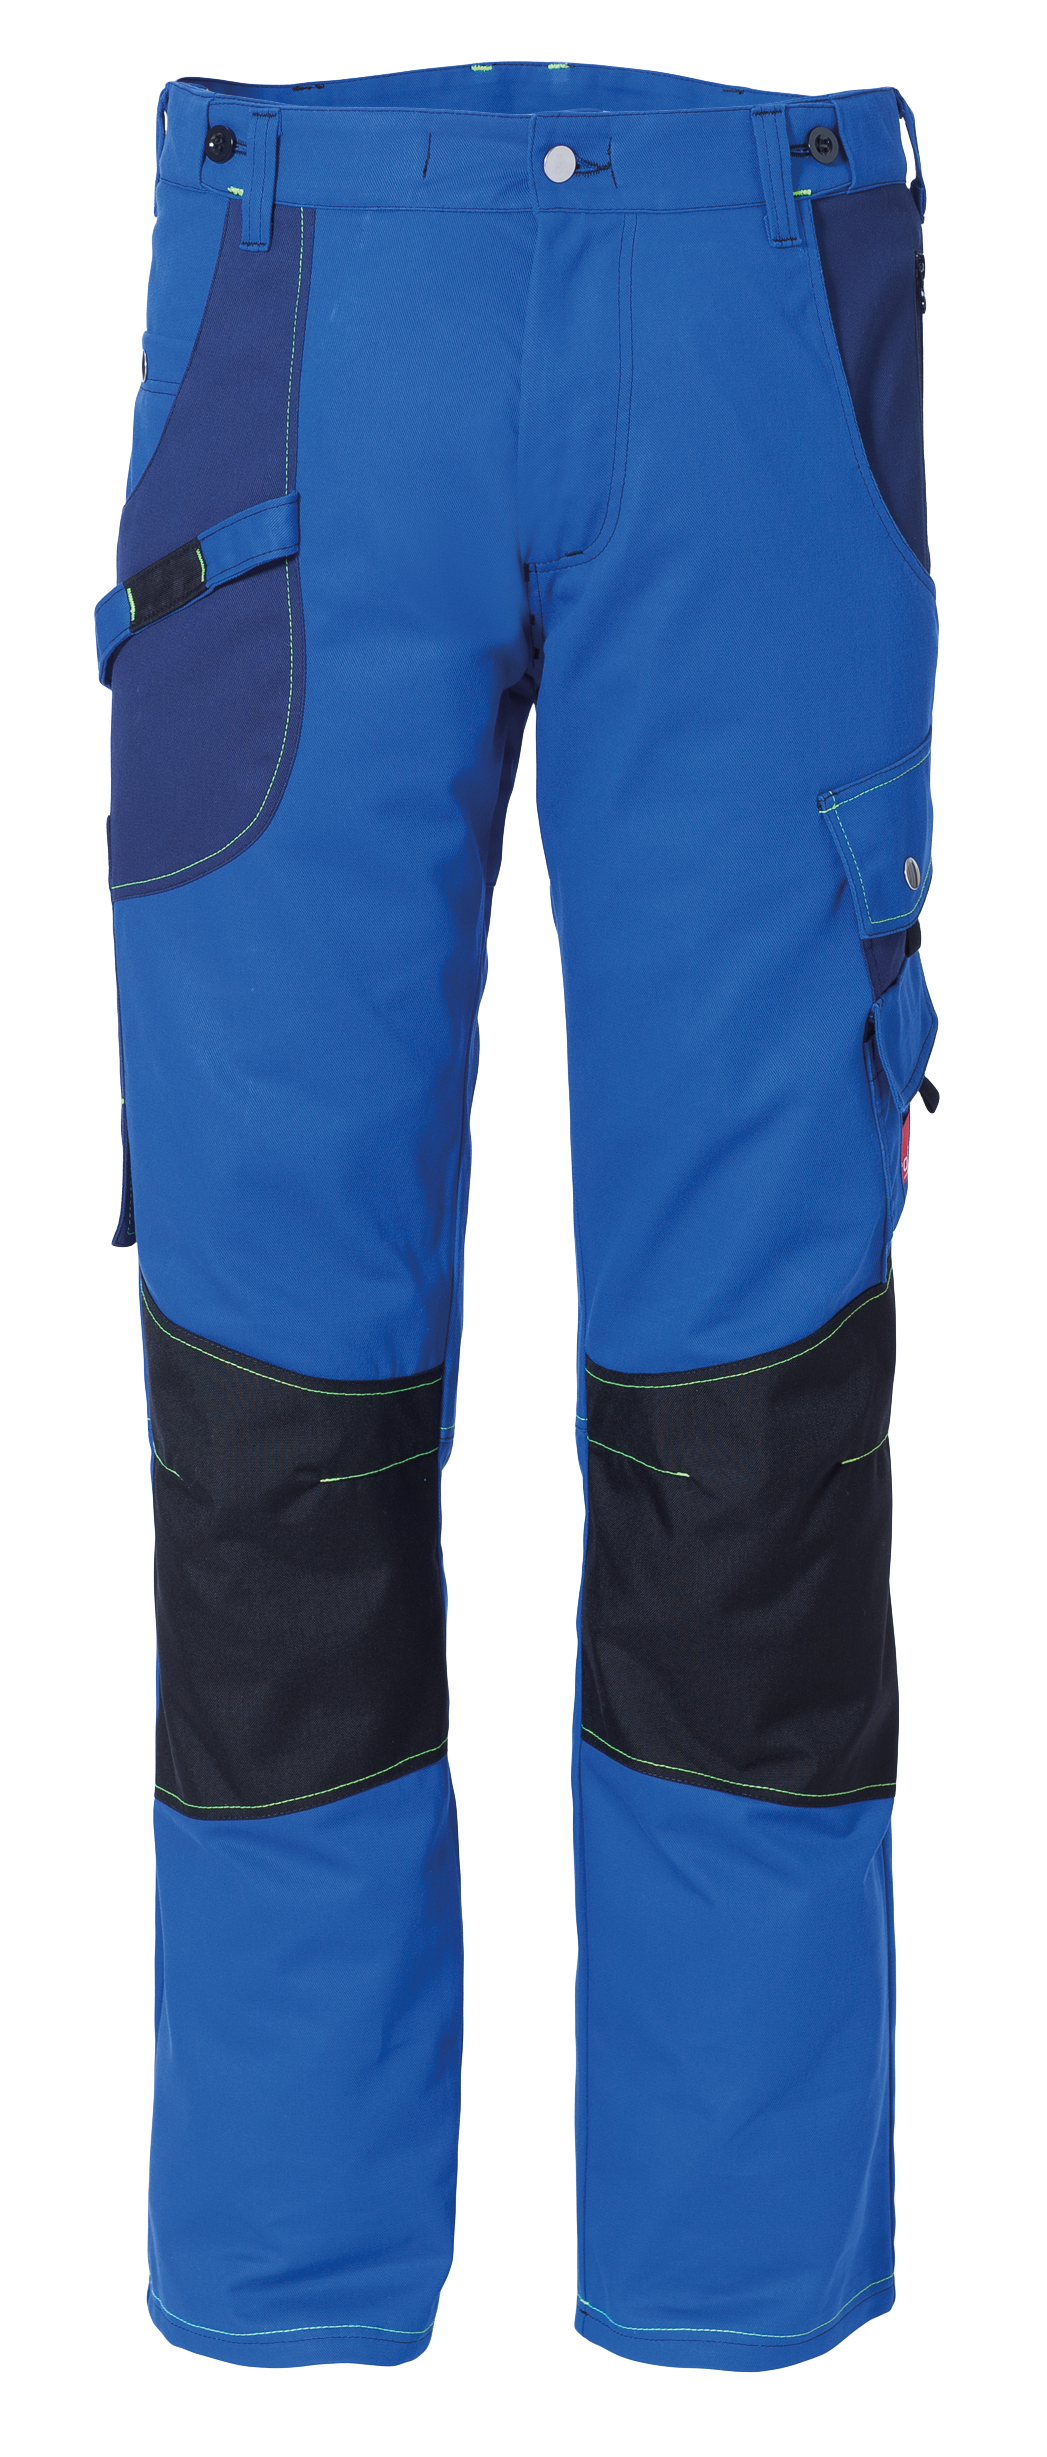 ROFA Bundhose Arbeitshose Berufshose Workerhose Arbeitskleidung Berufskleidung Young kornblau marine ca 270 g